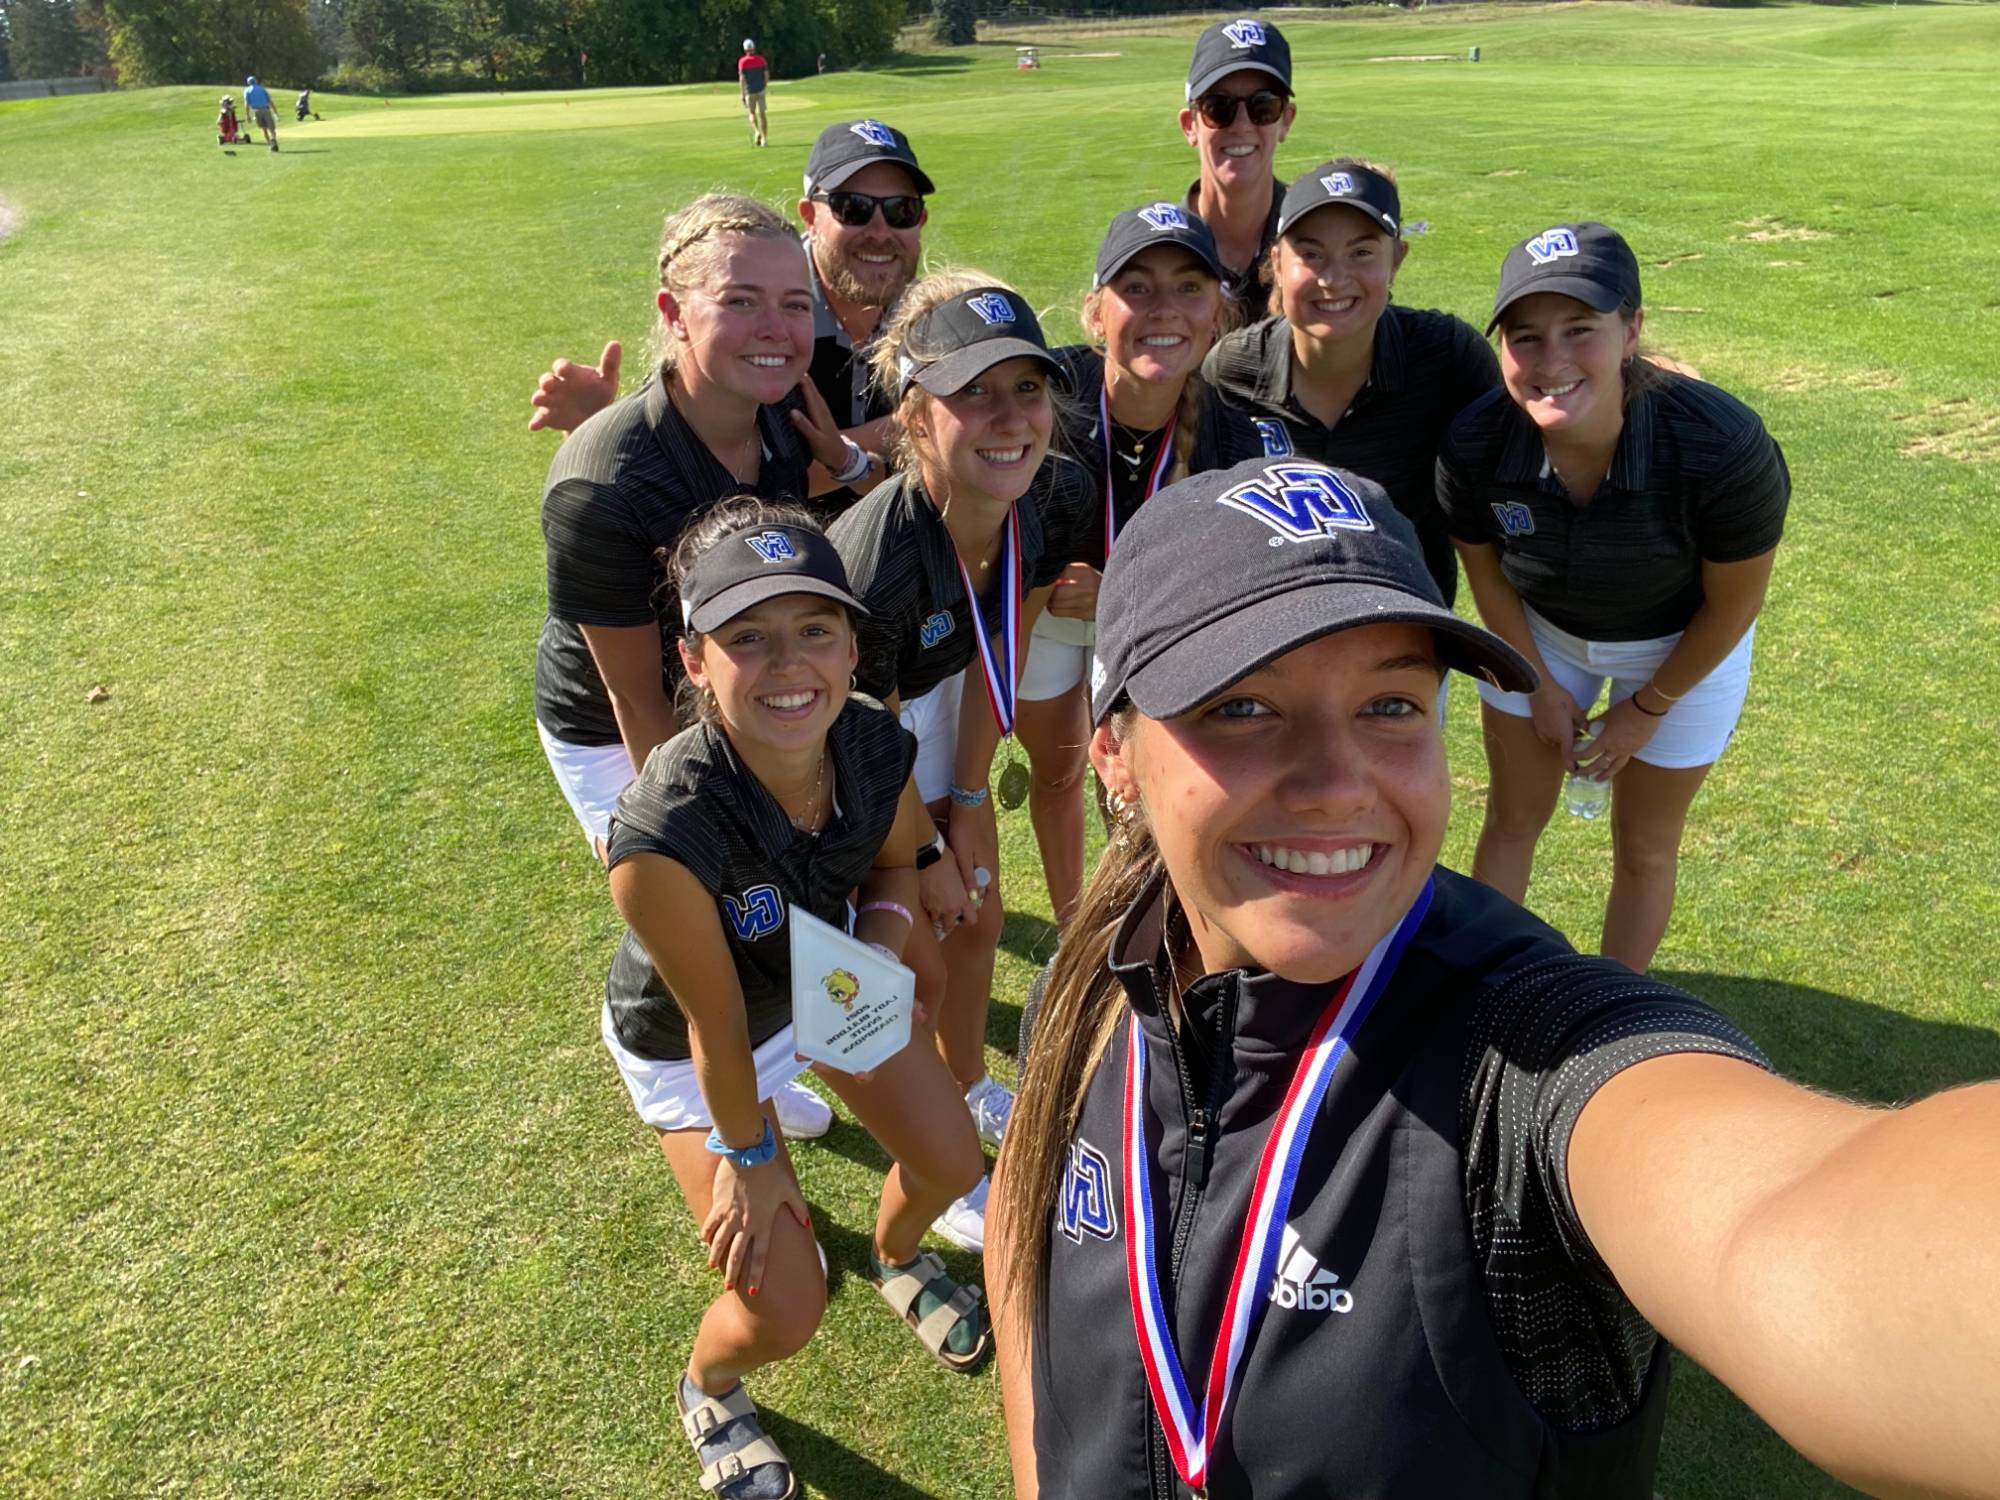 Women's golf team selfie on the course